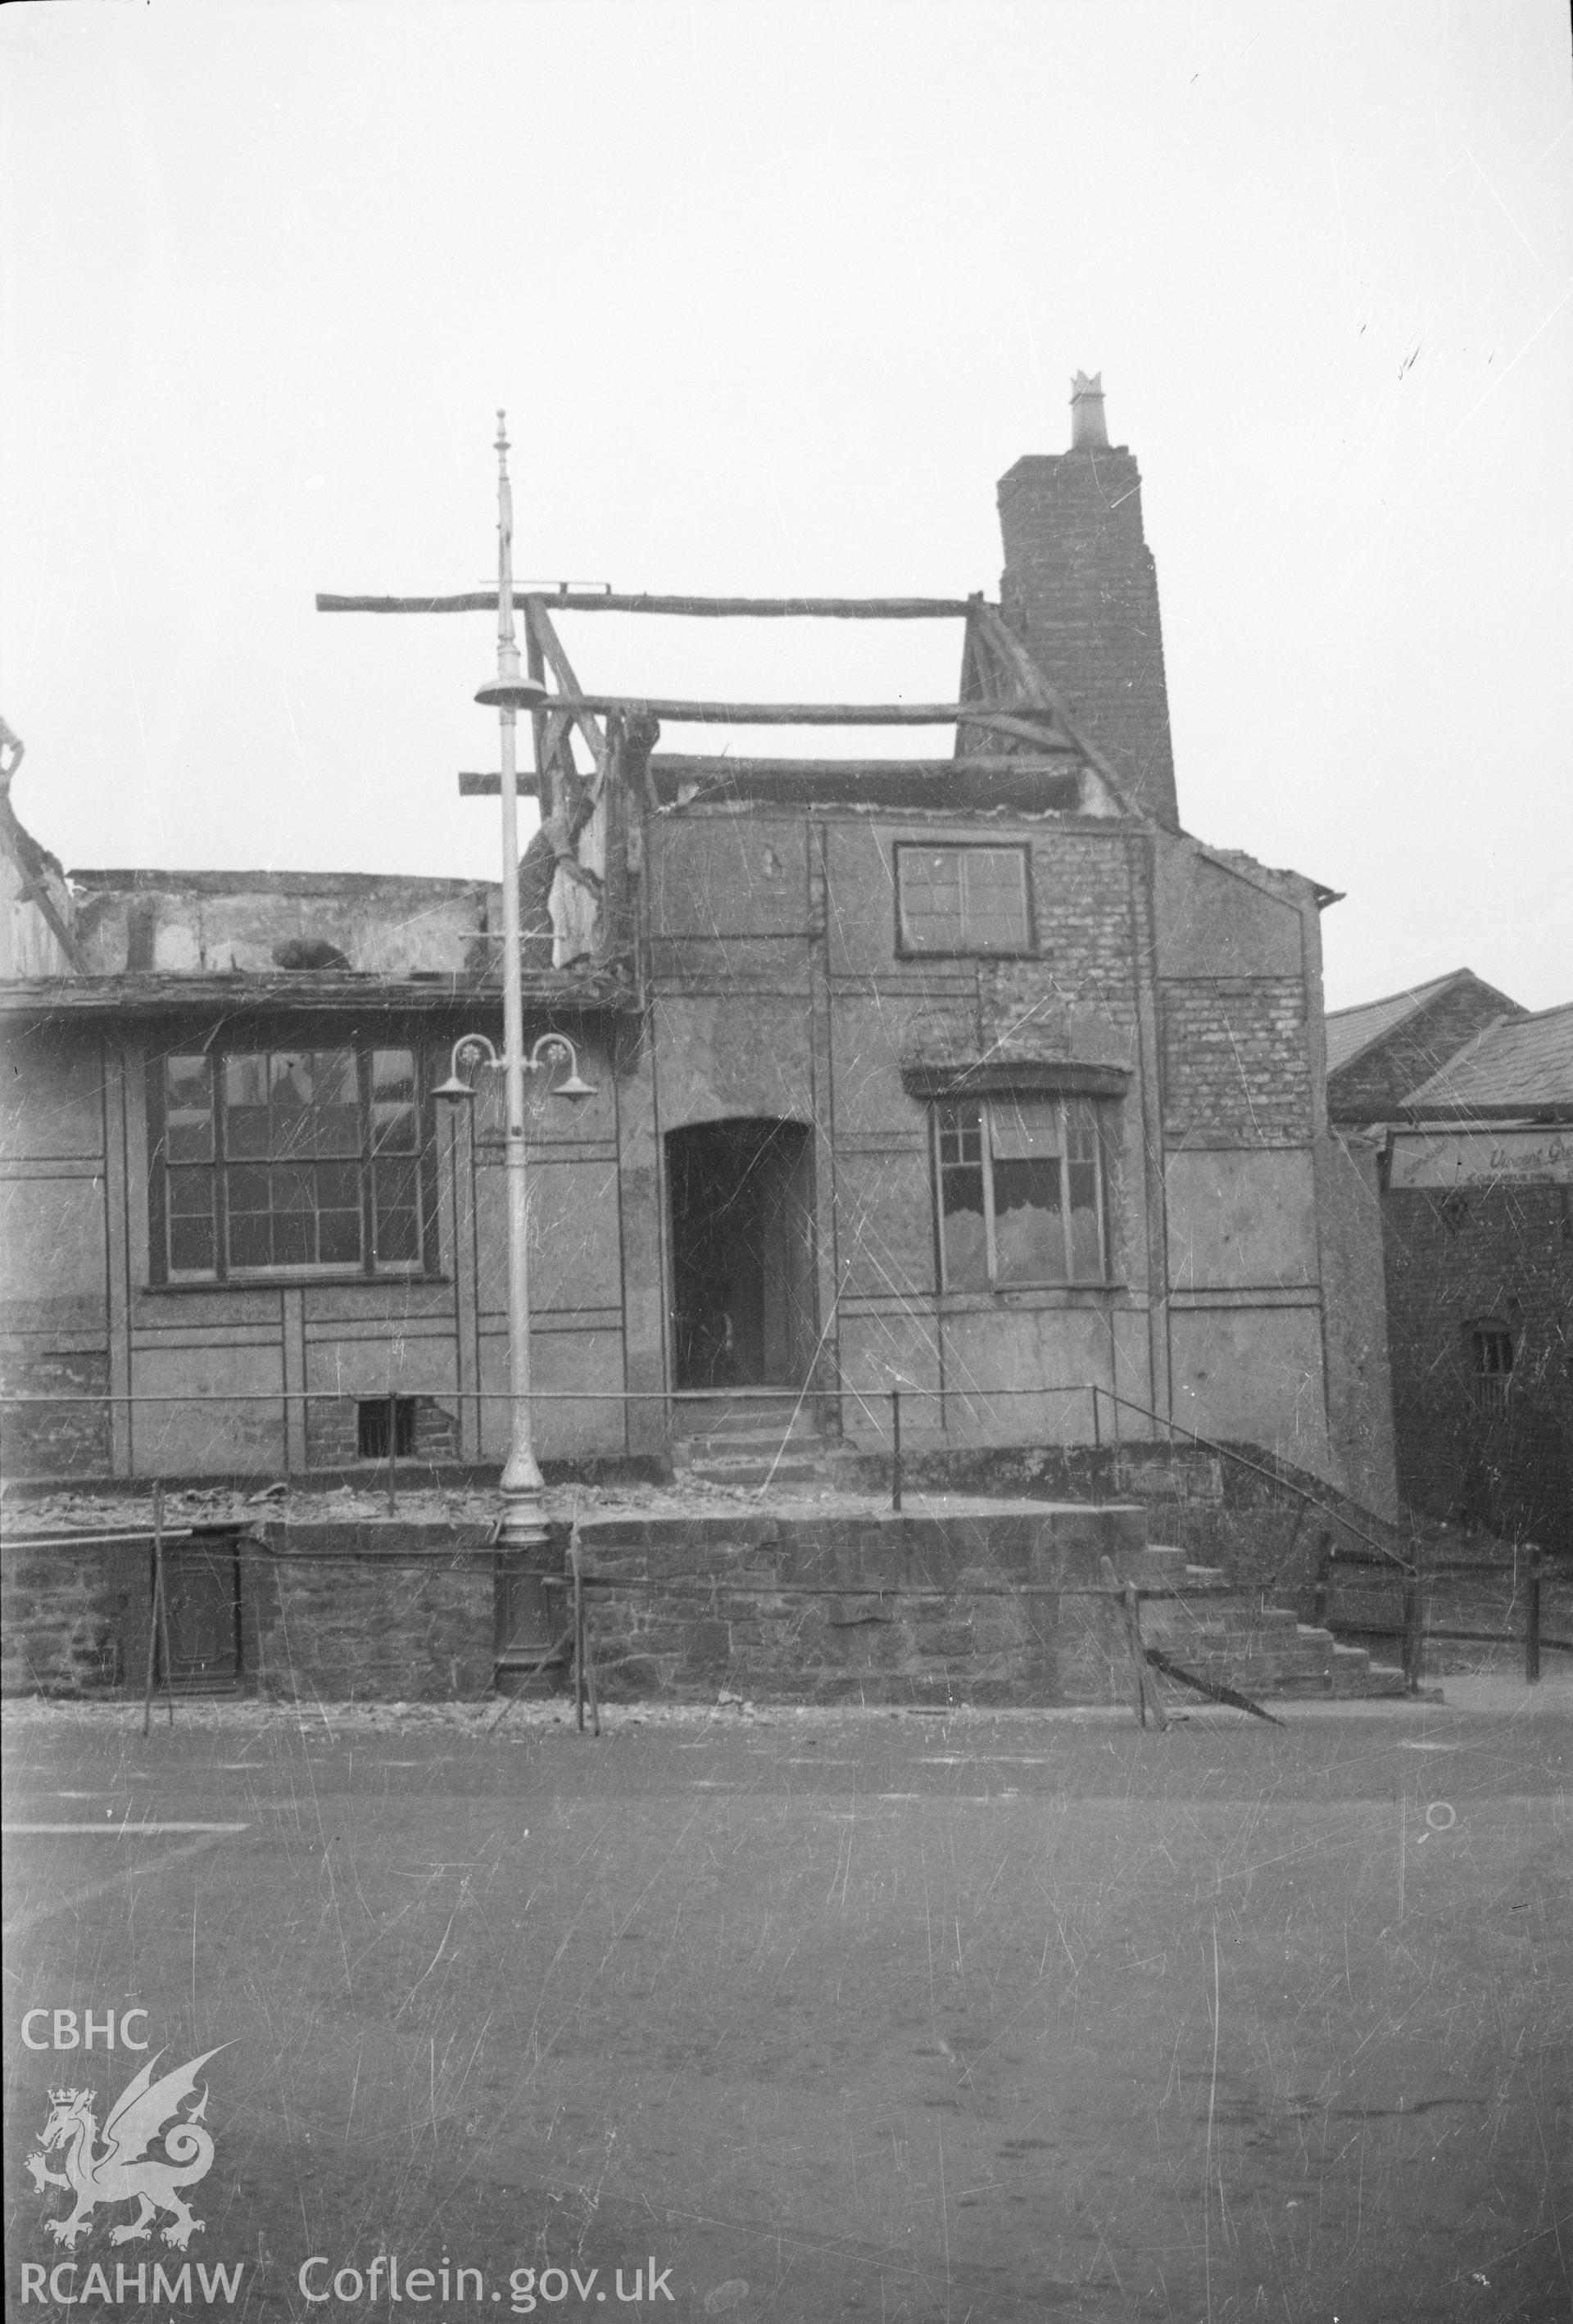 Digital copy of a nitrate negative showing an unidentified building in Wrexham - demolition in progress, taken by RCAHMW.